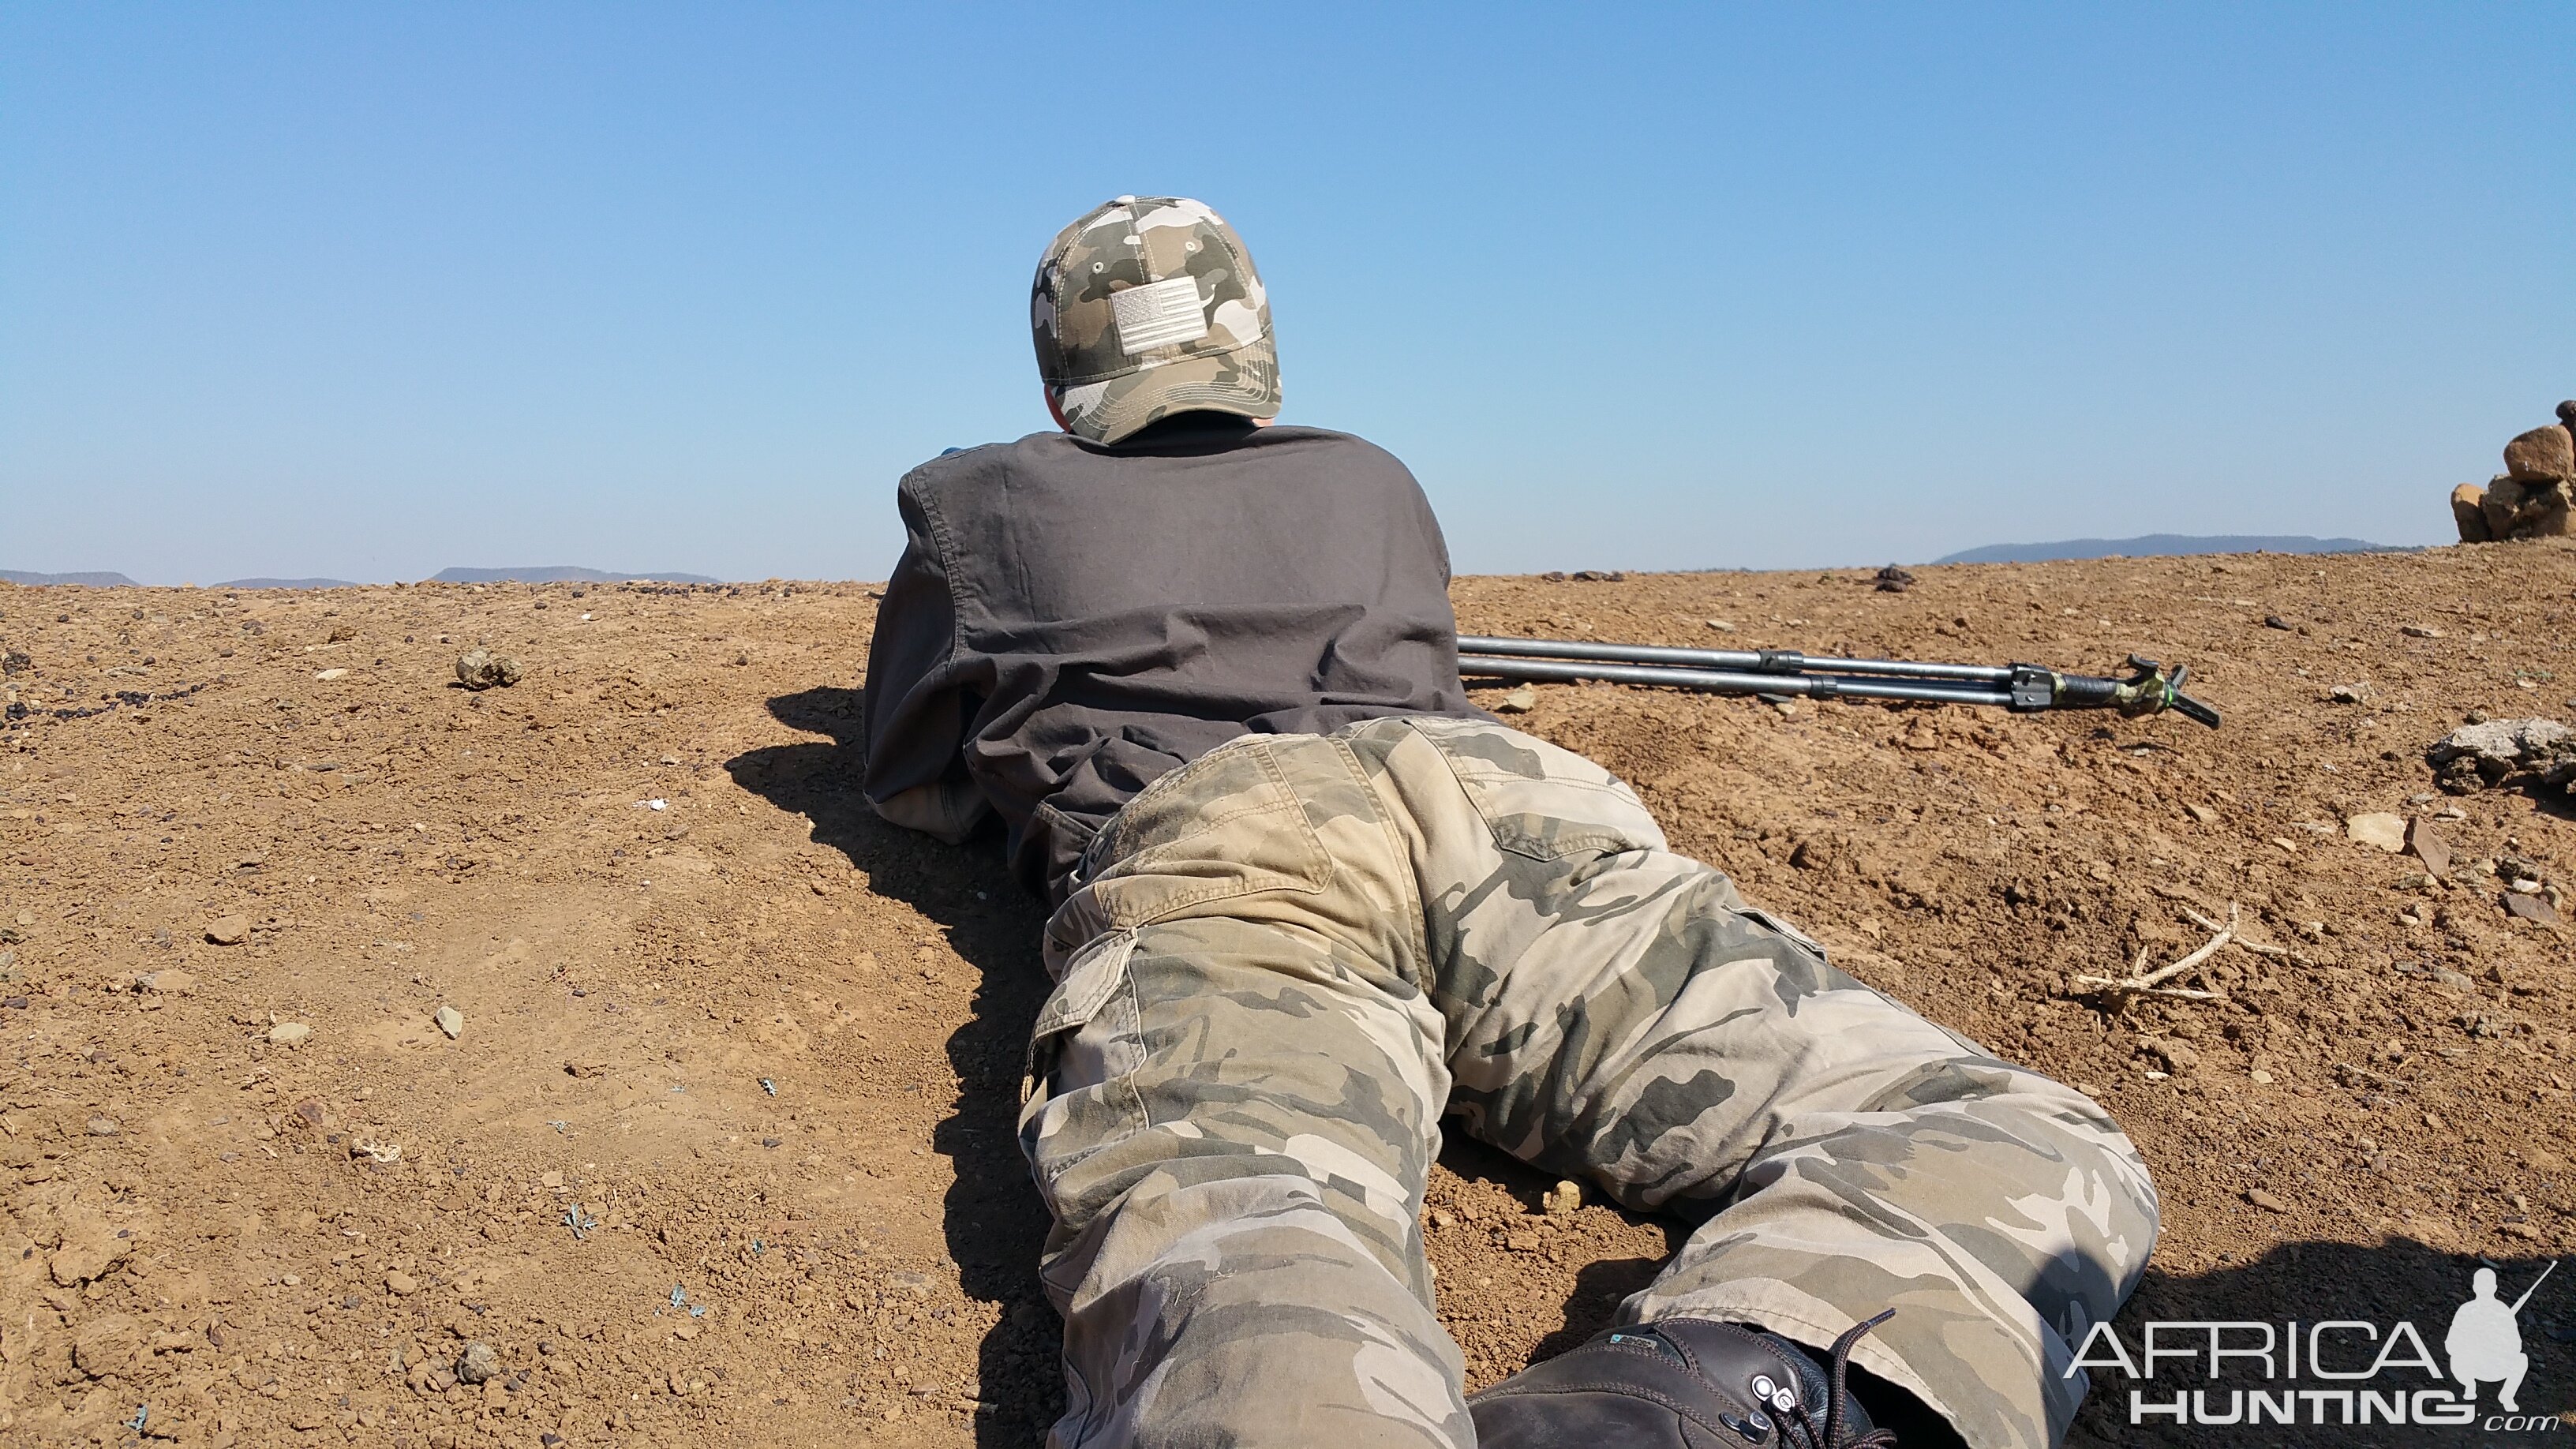 Springbok Sniper. Patiently waiting...